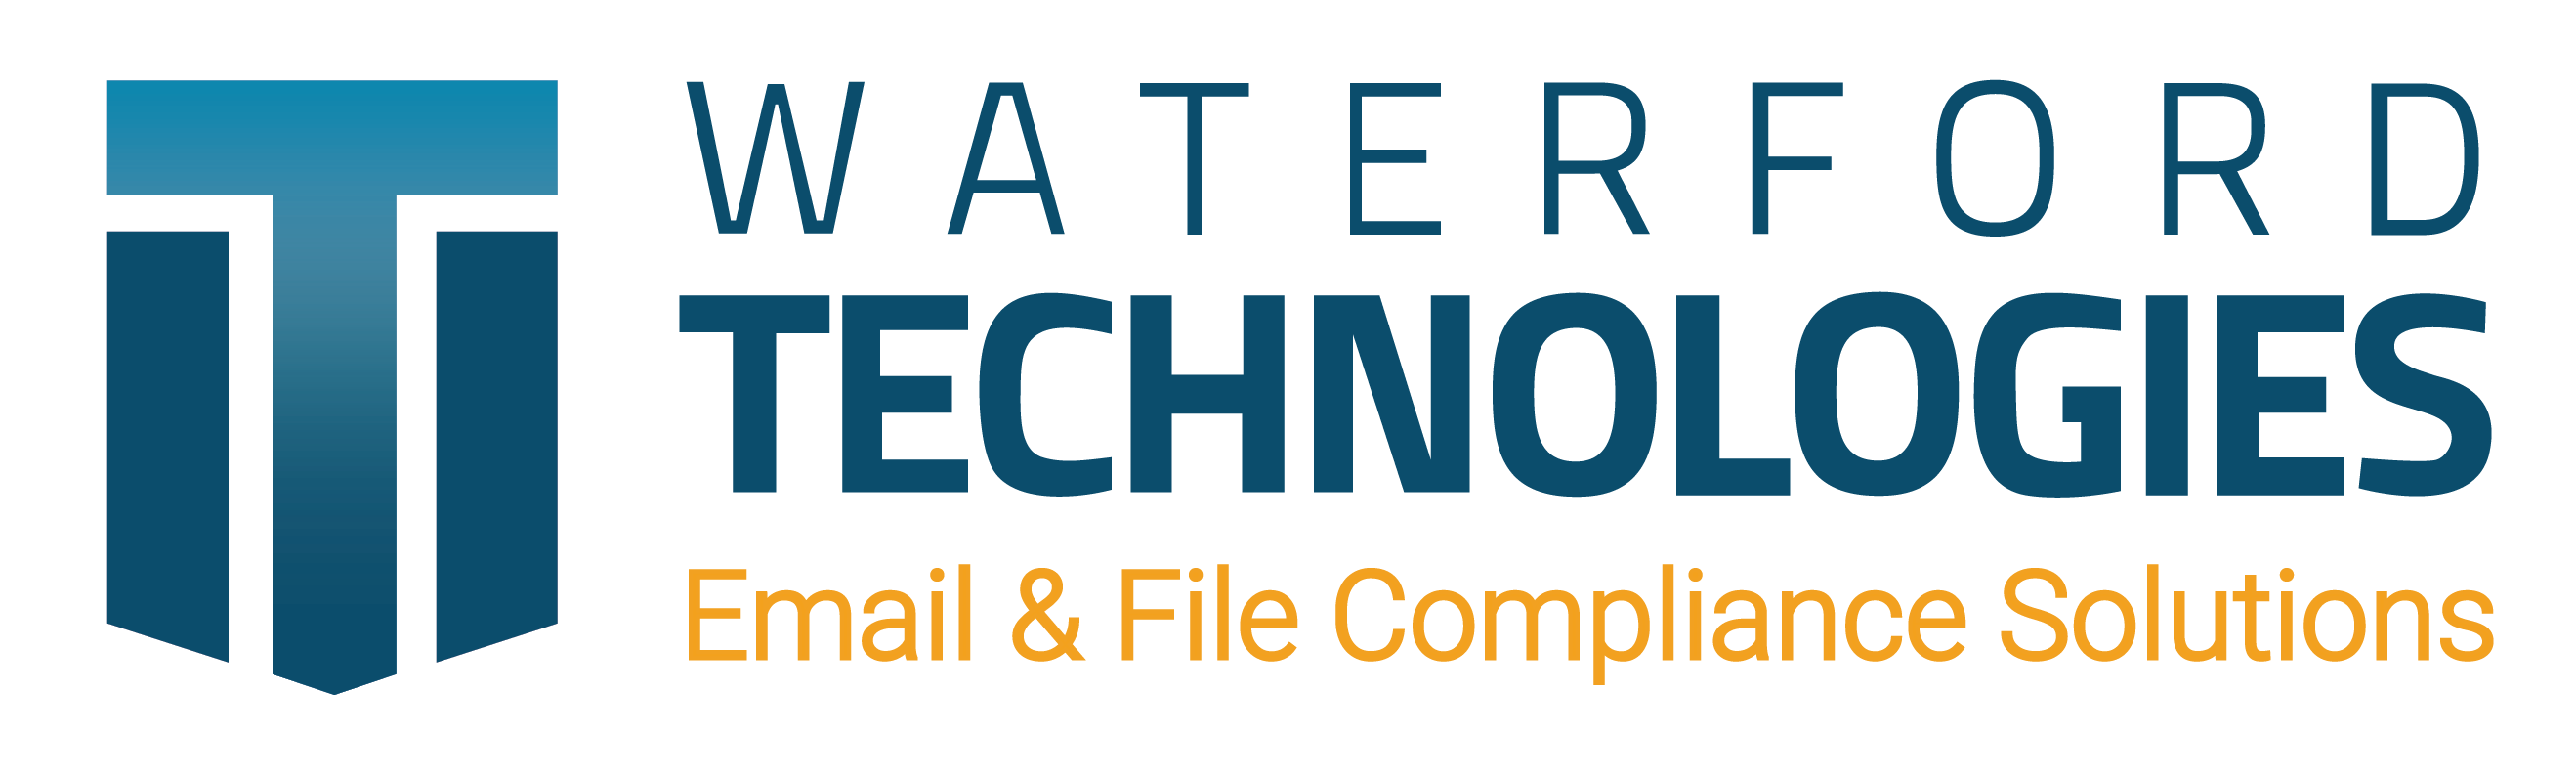 waterford technologies logo